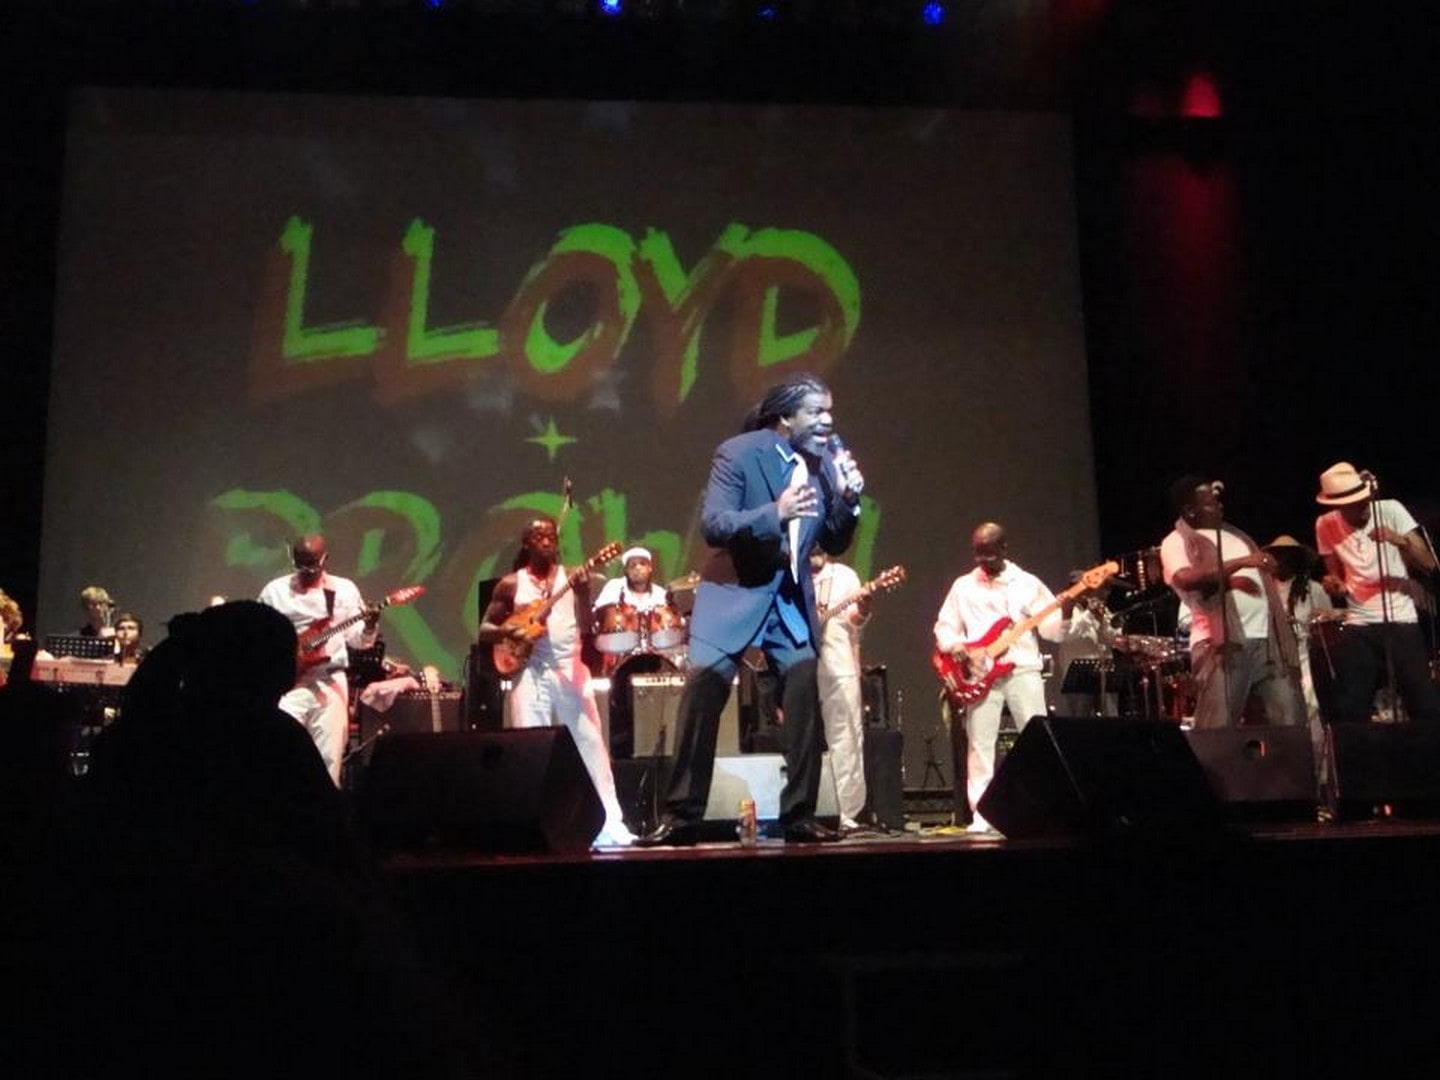 Lloyd Brown Music